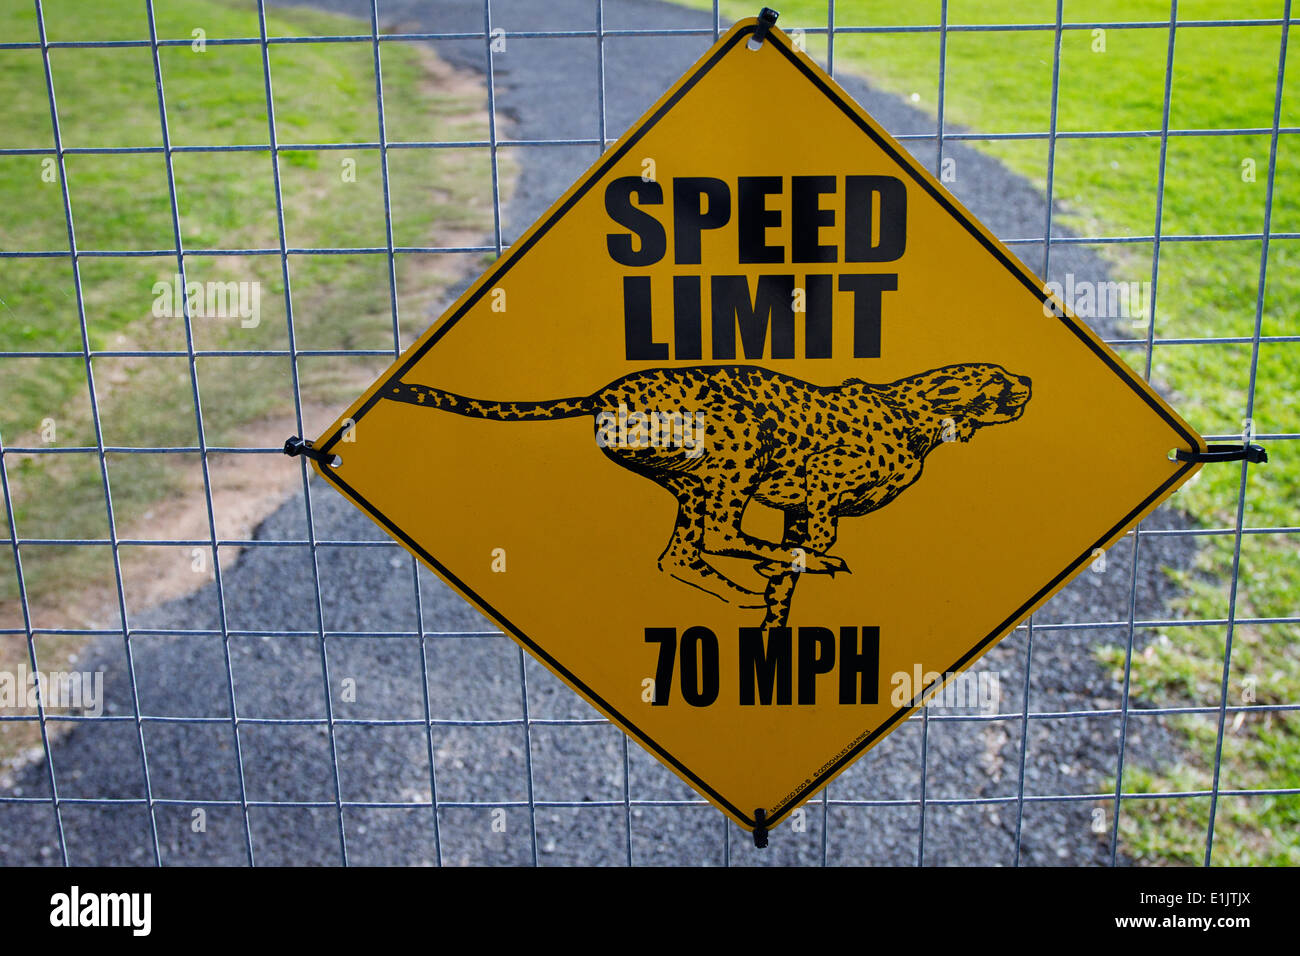 A fun 70mph speed limit sign on a cheetah enclosure fence at the Cheetah Outreach. Stock Photo